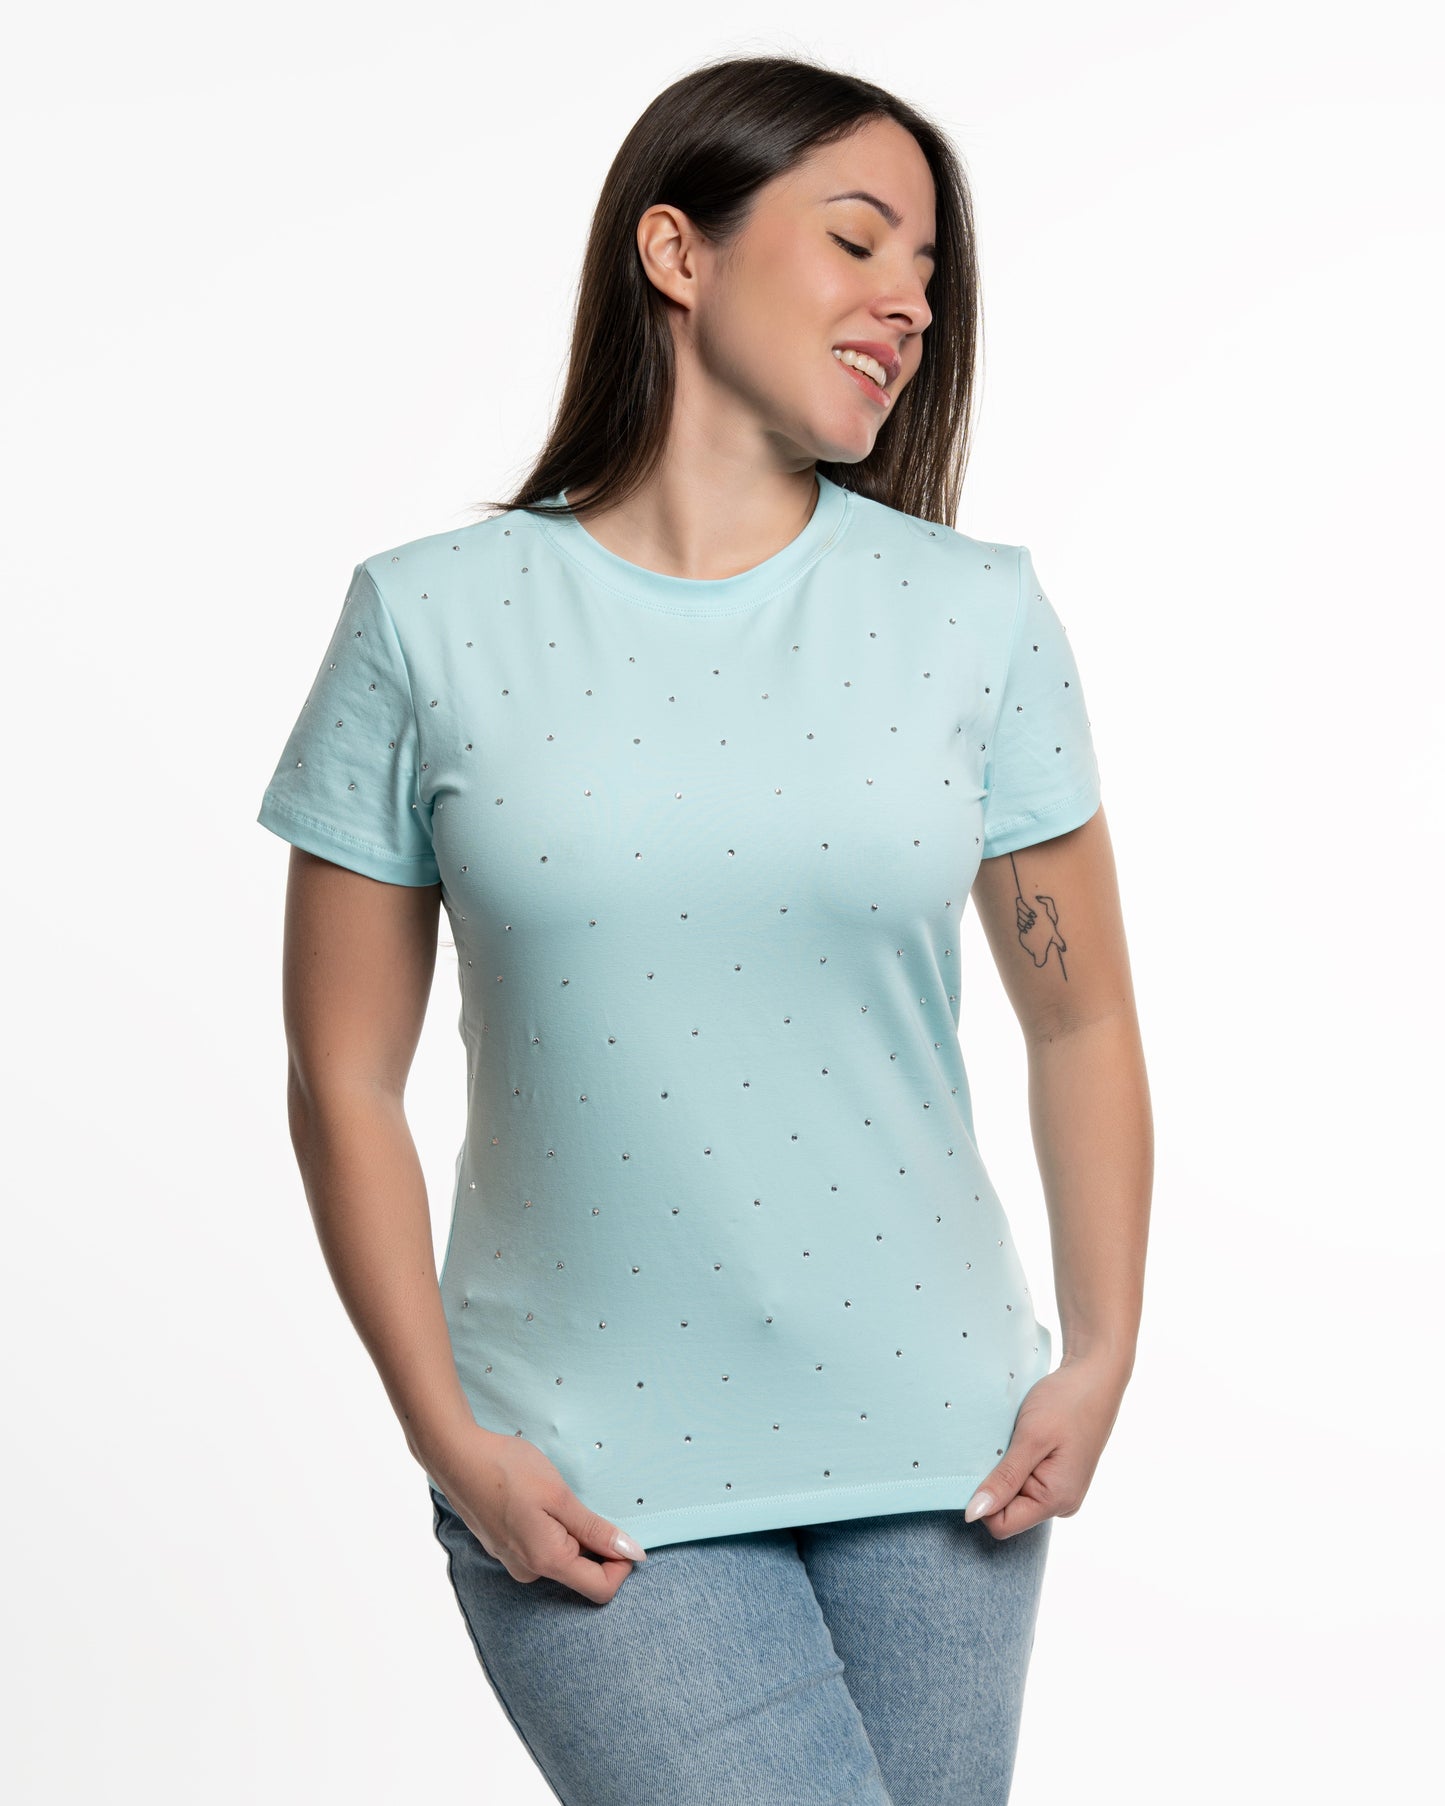 Short Sleeve T-Shirts for Women - Rhinestones Teal